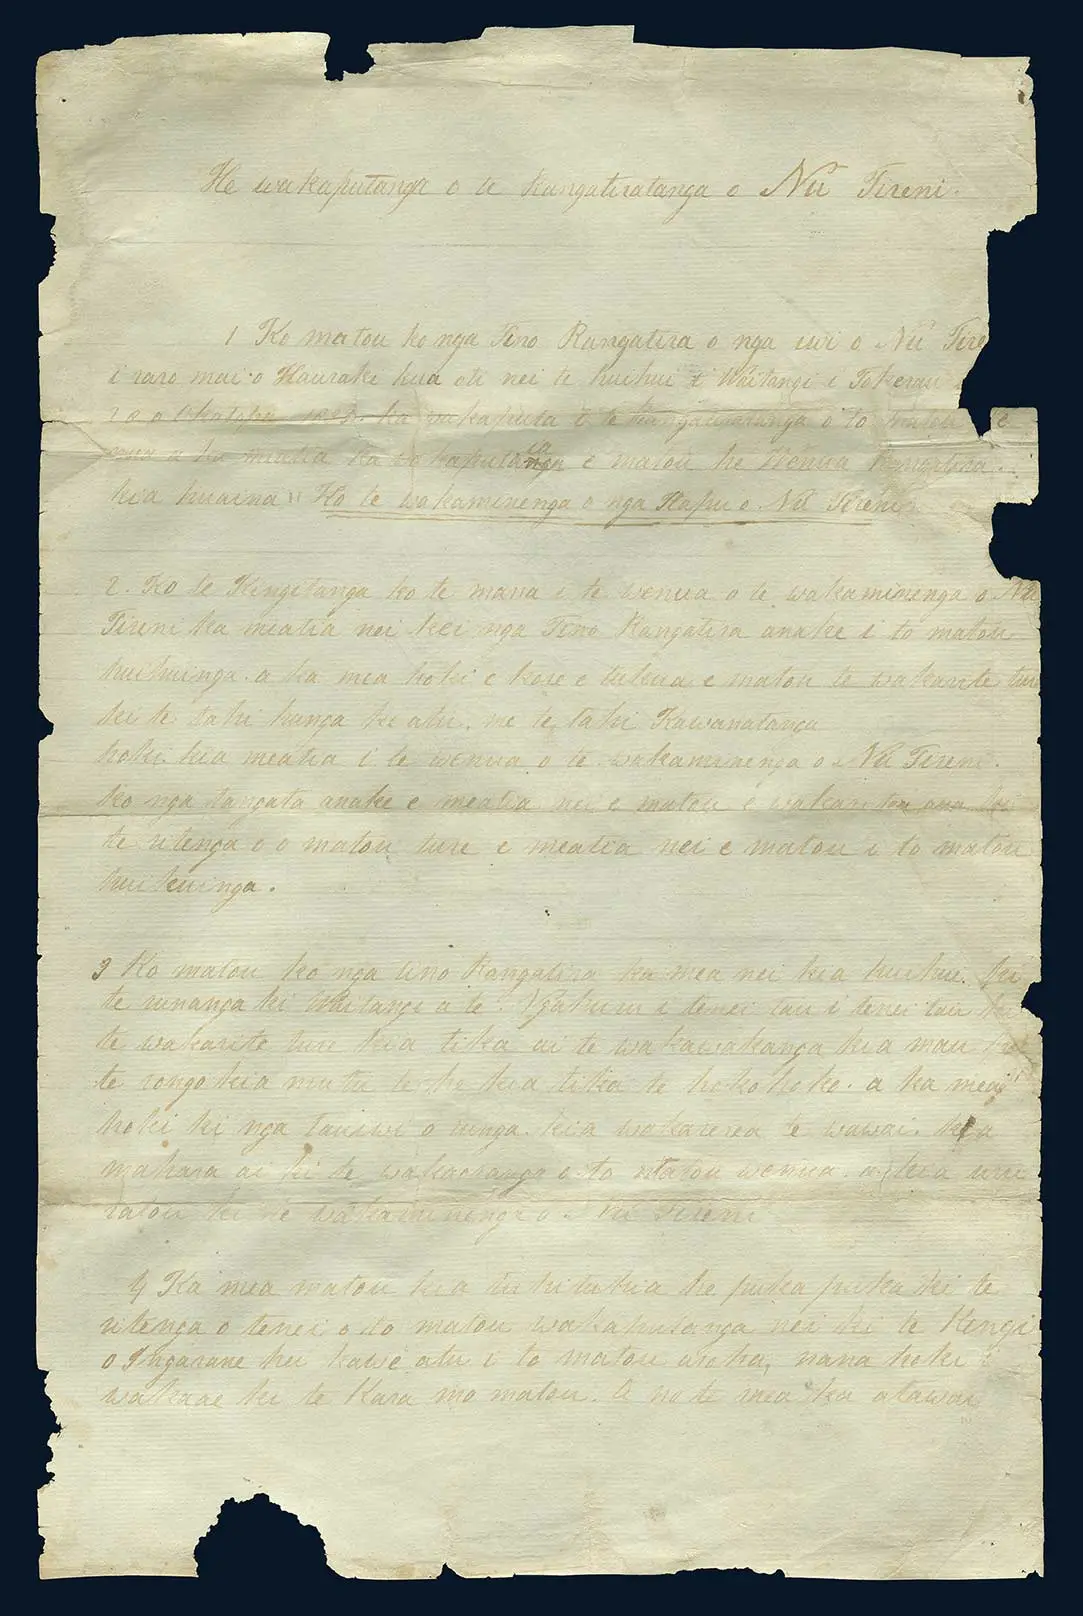 Sheet 1, page 1 of He Whakaputanga o te Rangatiratanga o Nu Tireni — the Declaration of Independence. It shows 4 articles handwritten in te reo Māori. Some parts of the outer edge of the sheet are missing.